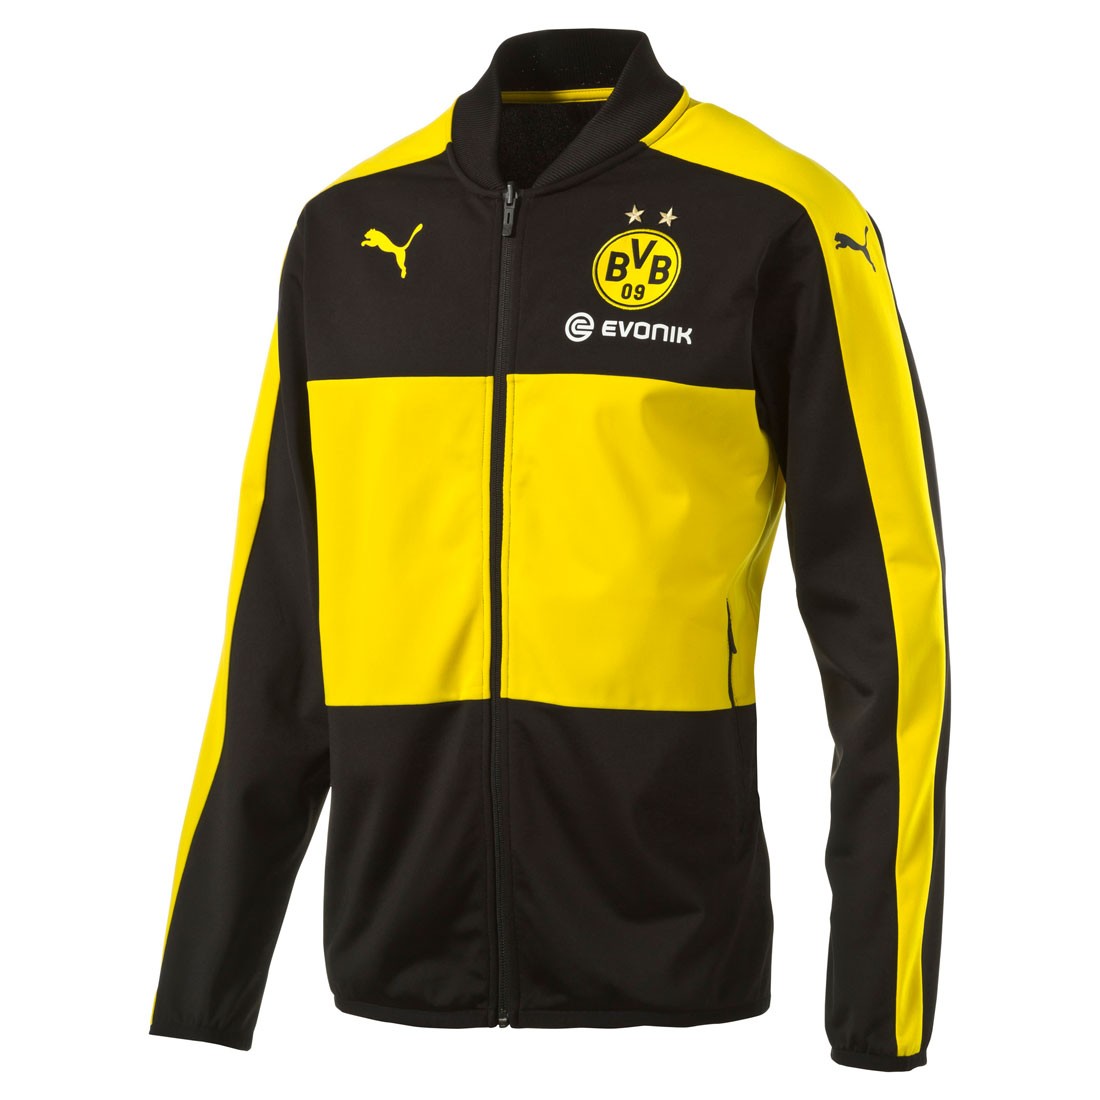 Puma BVB Poly Jacket with Sponsor Herren Trainingsjacke 749873 01 Borussia Dortmund 09